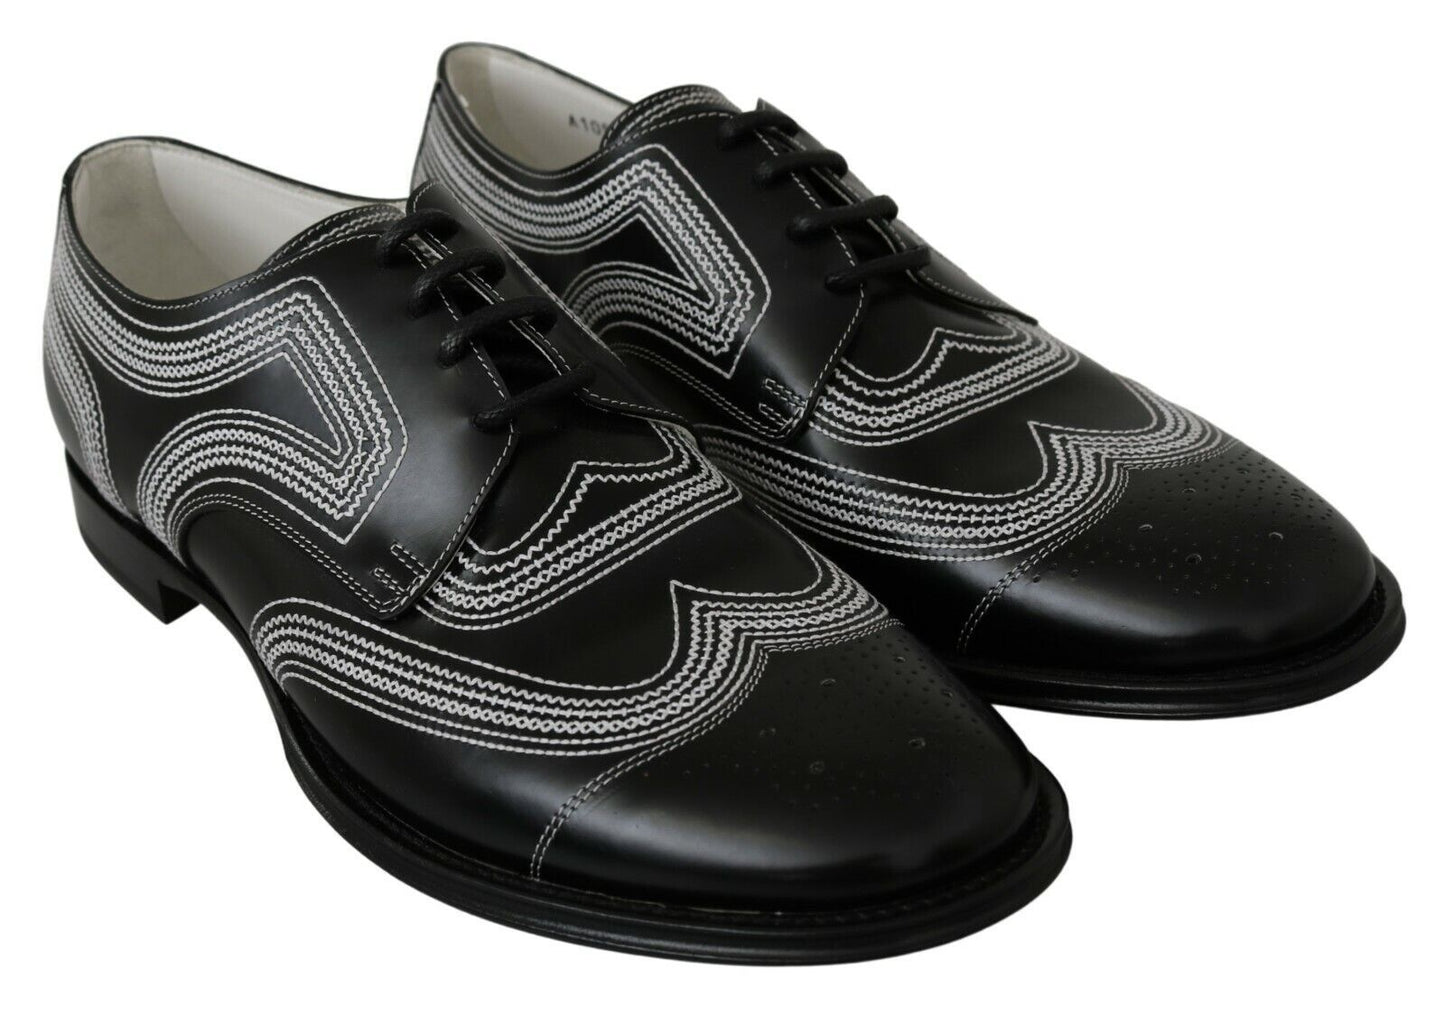 Dolce & Gabbana en cuir noir derby chaussures de dentelle blanche formelles